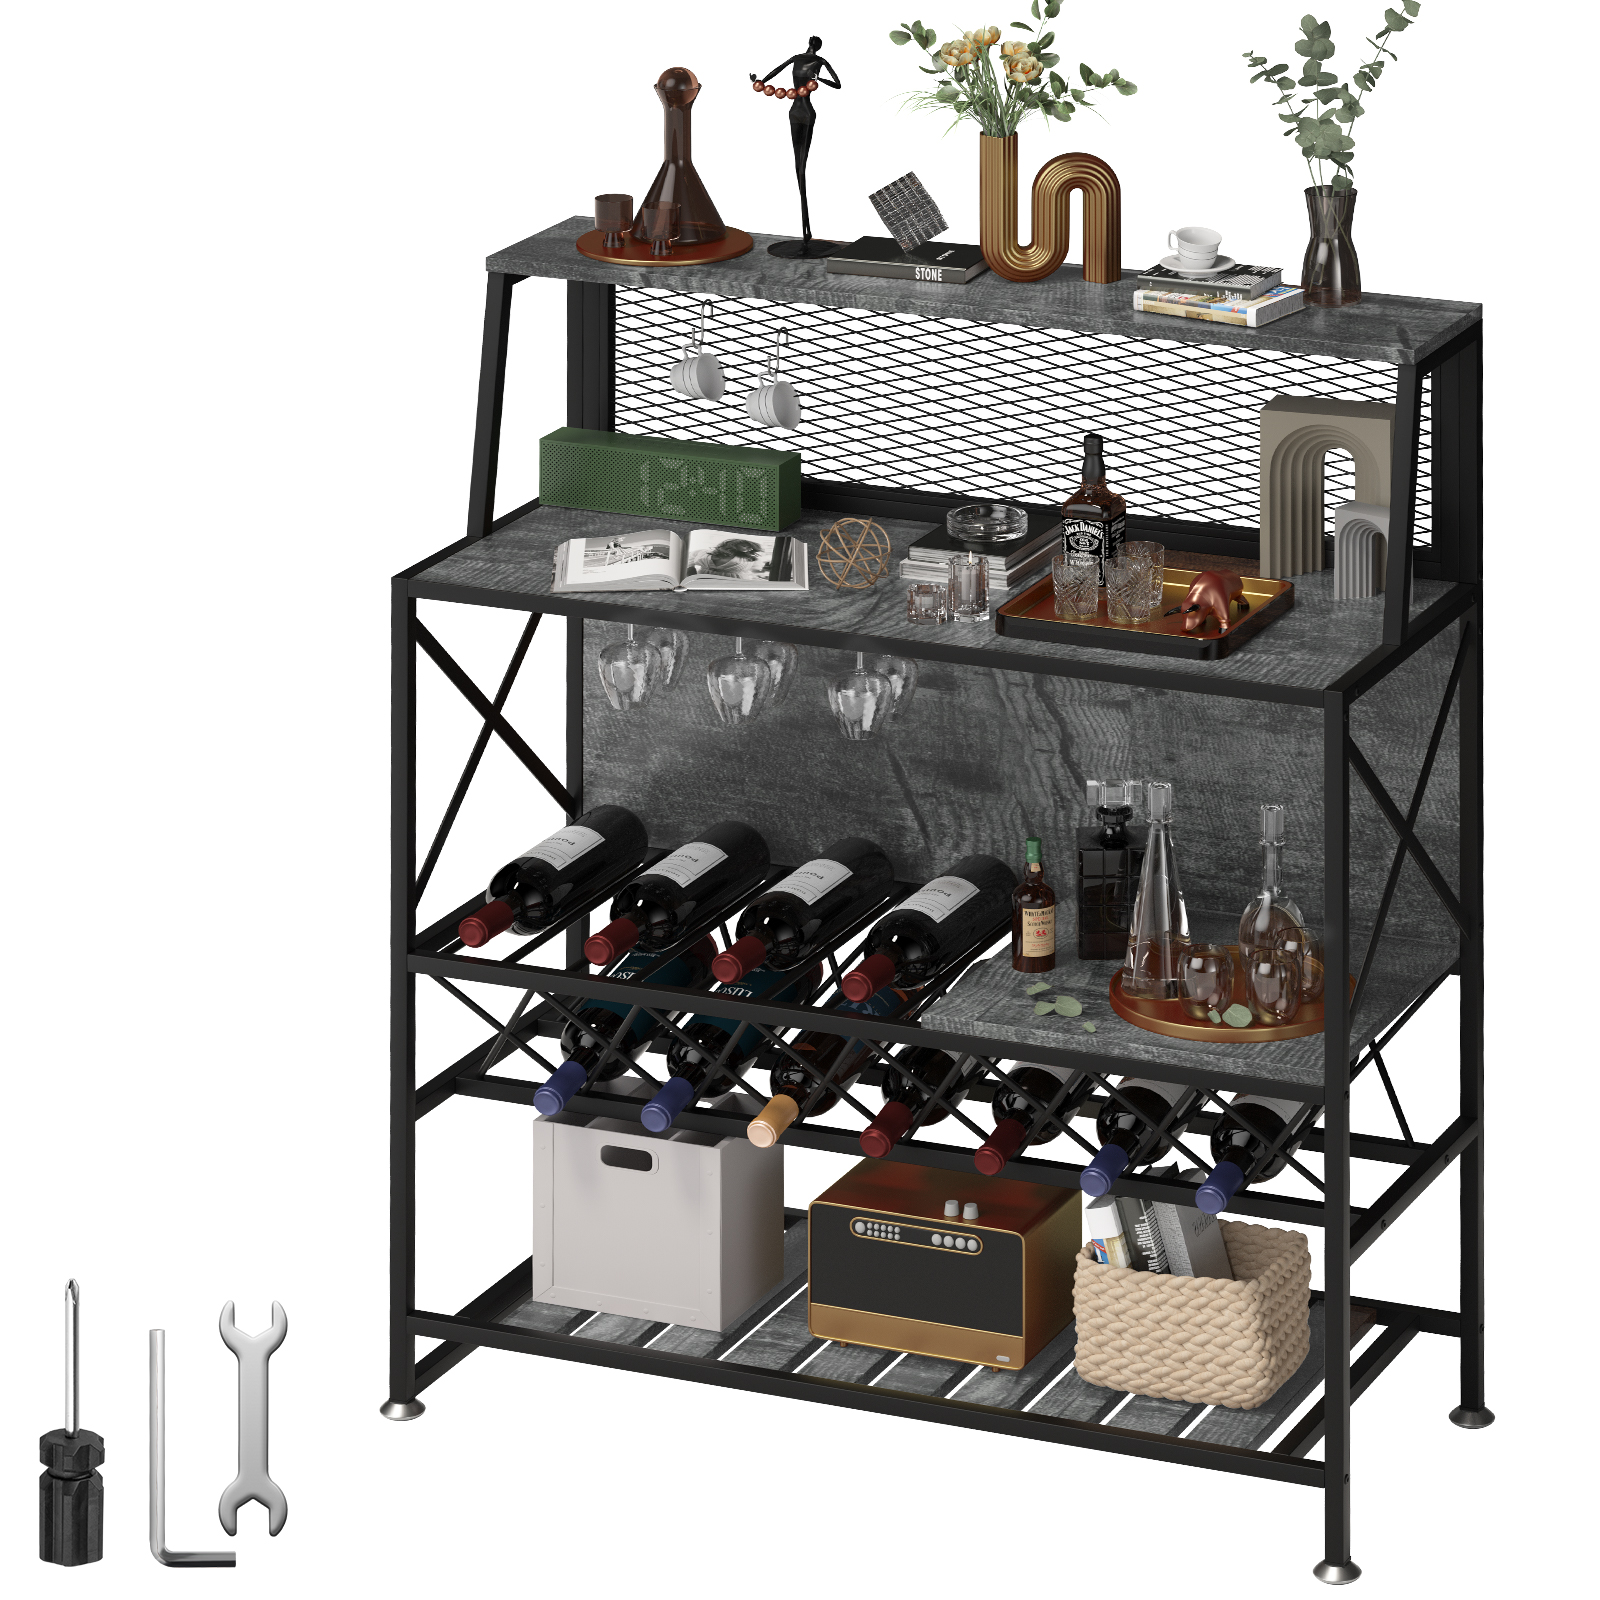 VEVOR Kitchen Wine Baker's Rack, Microwave Oven Stand, 6-Tier Kitchen Rack with 11 Side Hooks, Bakers Racks for Kitchens with Storage, Wine Rack, Util